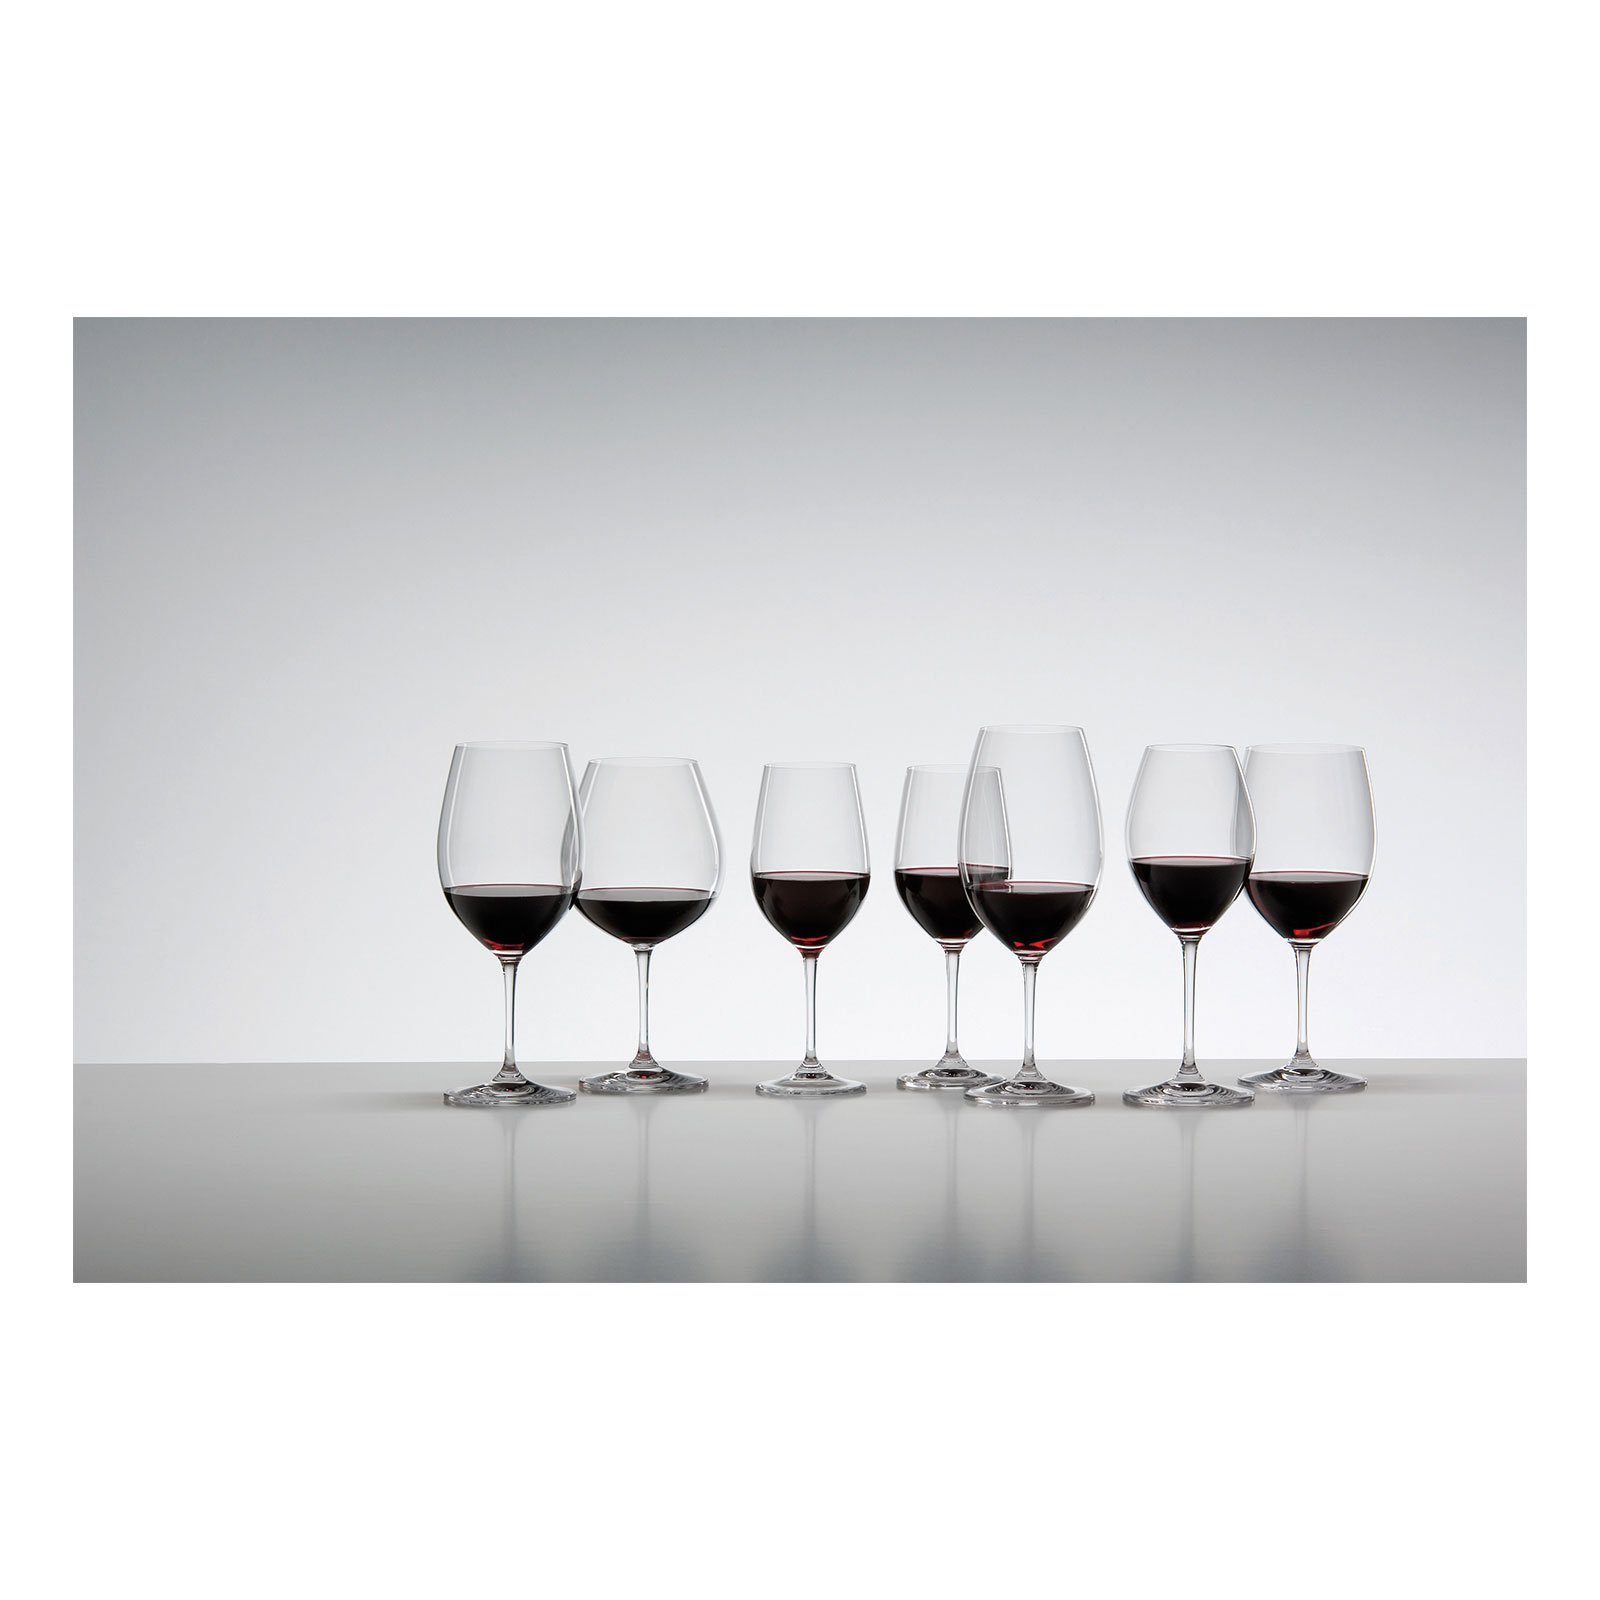 RIEDEL Glas Glas Vinum Cabernet Sauvignon/Merlot, Kristallglas